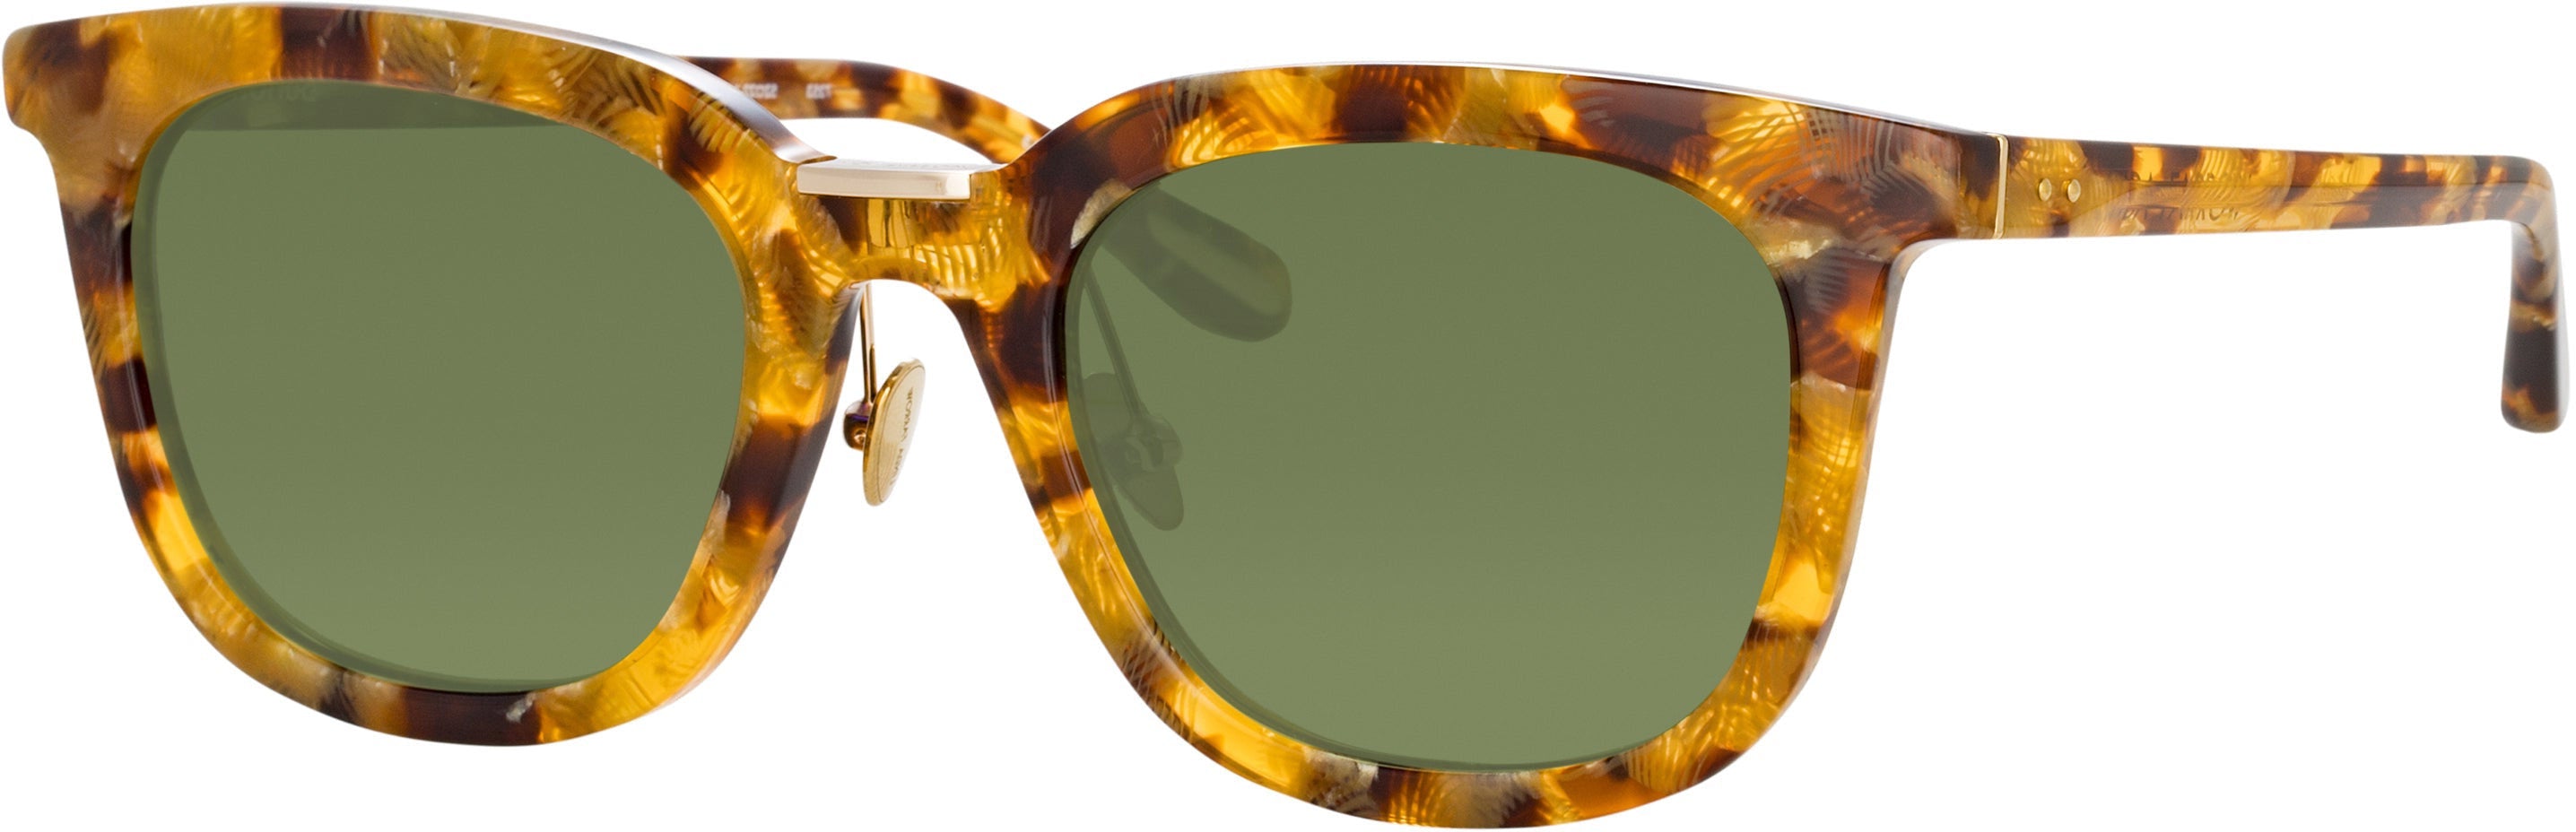 Color_LFL1102C9SUN - Burton D-Frame Sunglasses in Tobacco Tortoiseshell